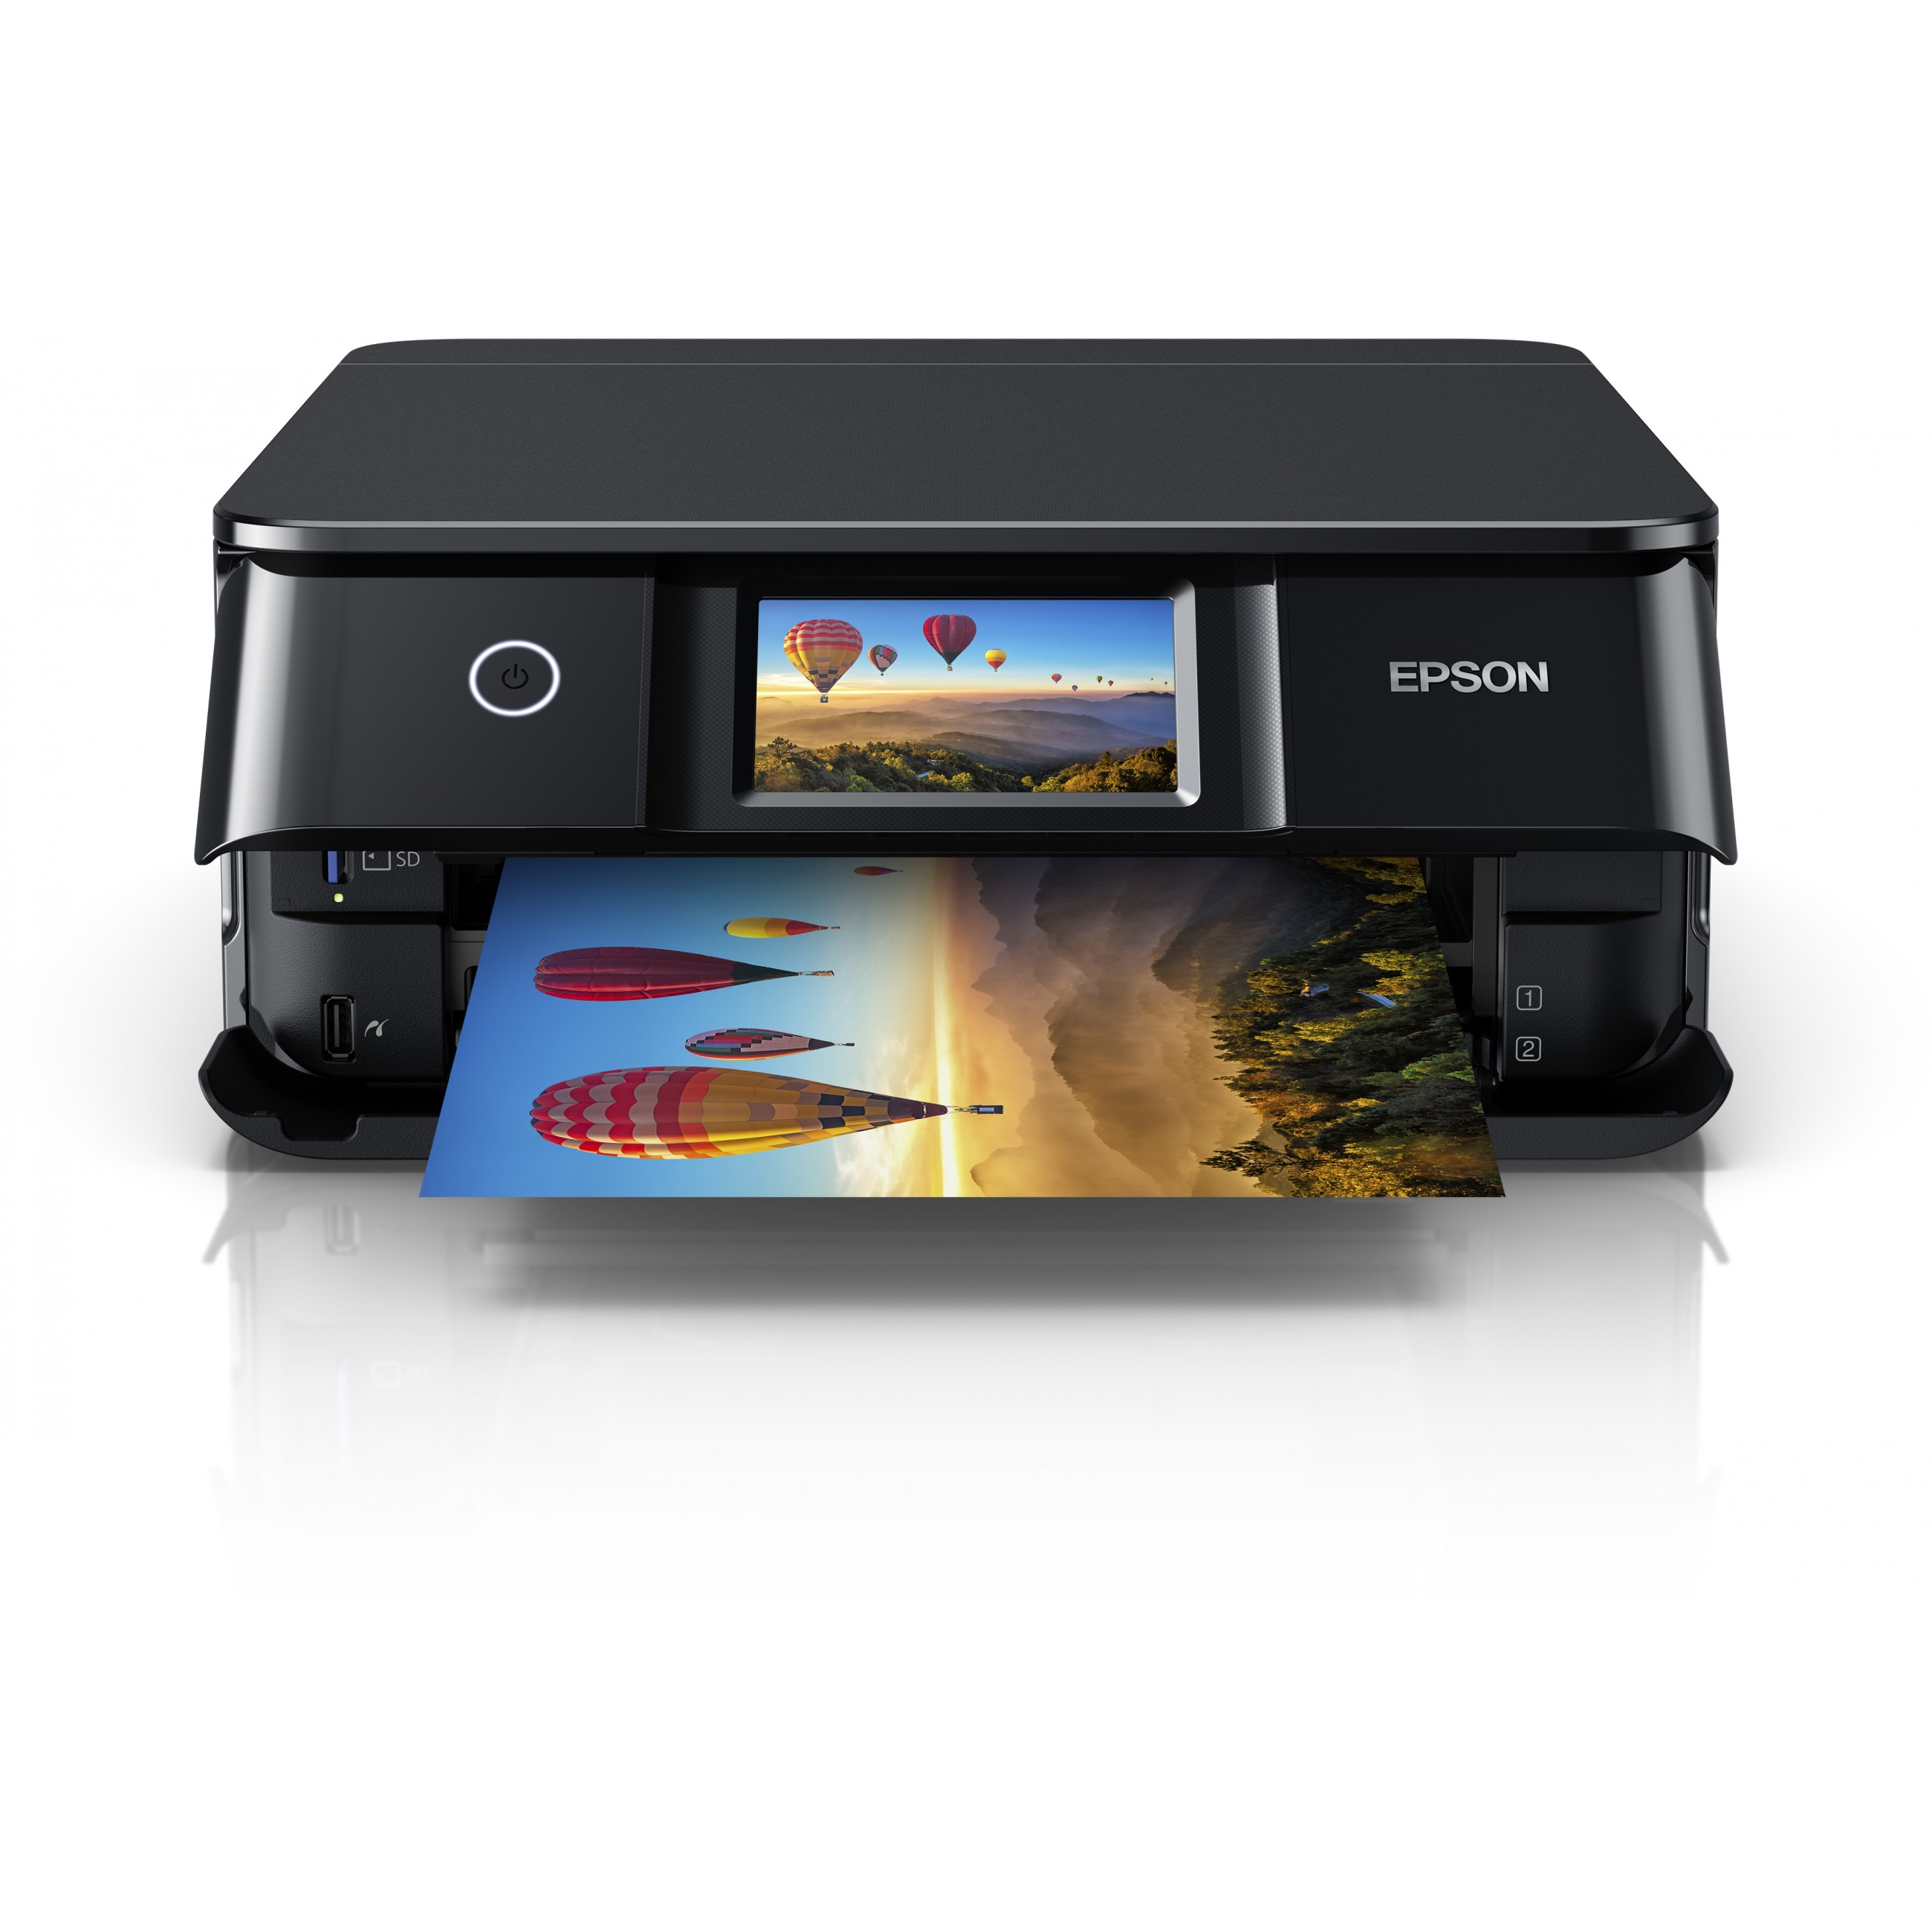 Epson Duplex Expression XP-8700 Tintenstrahldrucker Photo WLAN WiFi 3in1 T A4